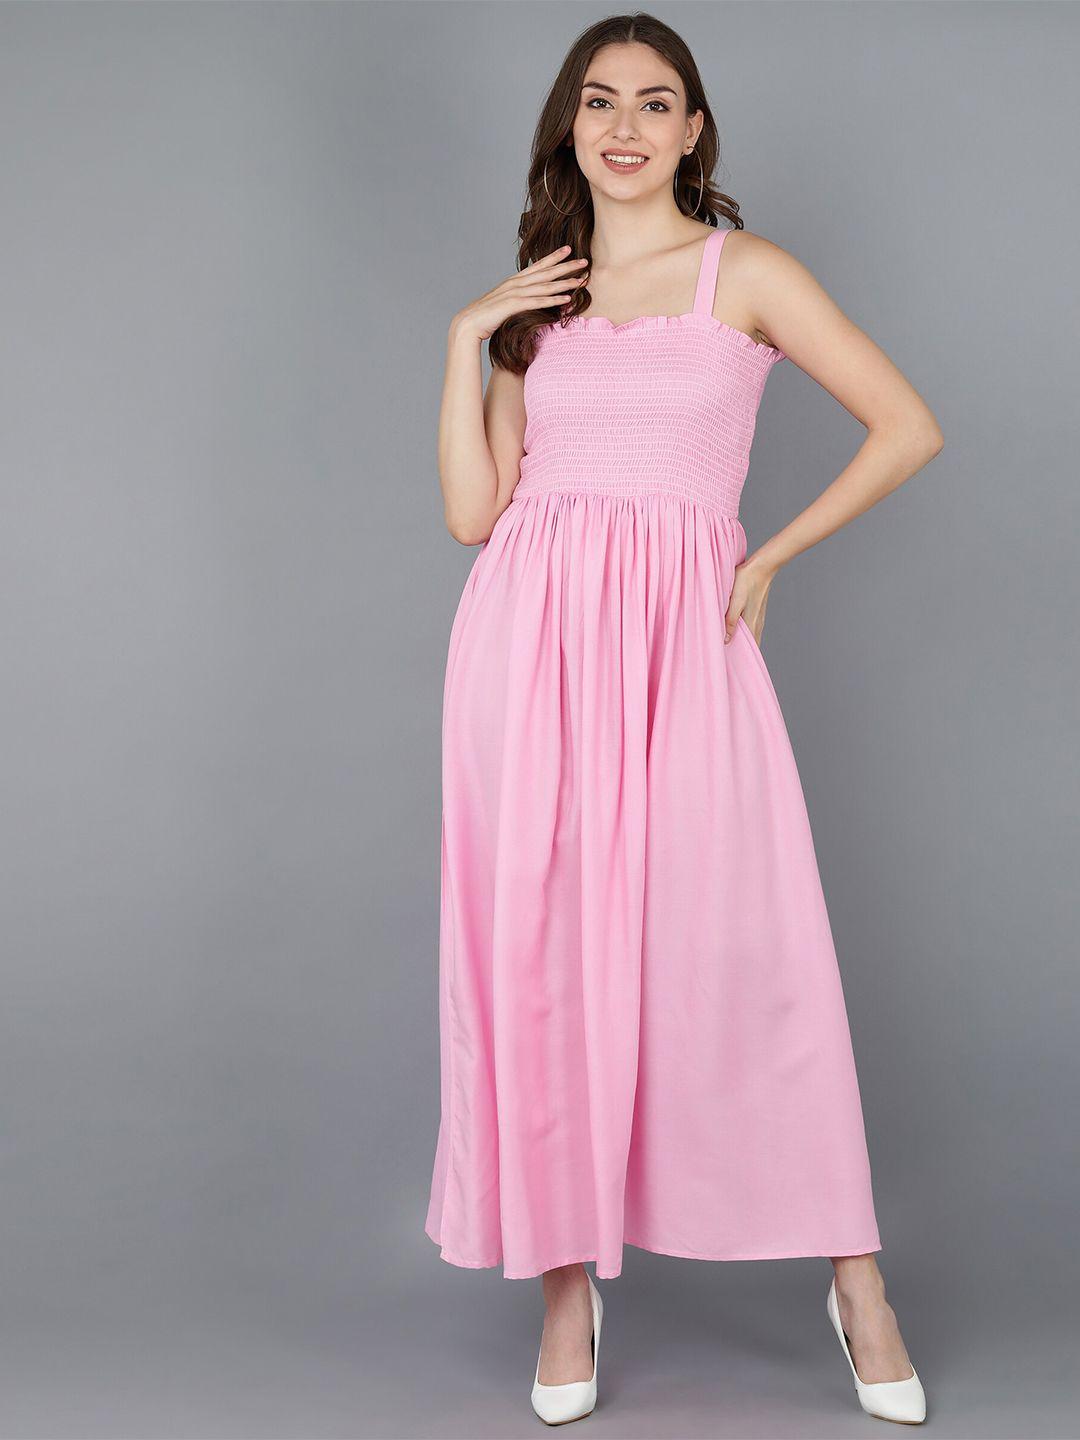 znx clothing pink maxi dress